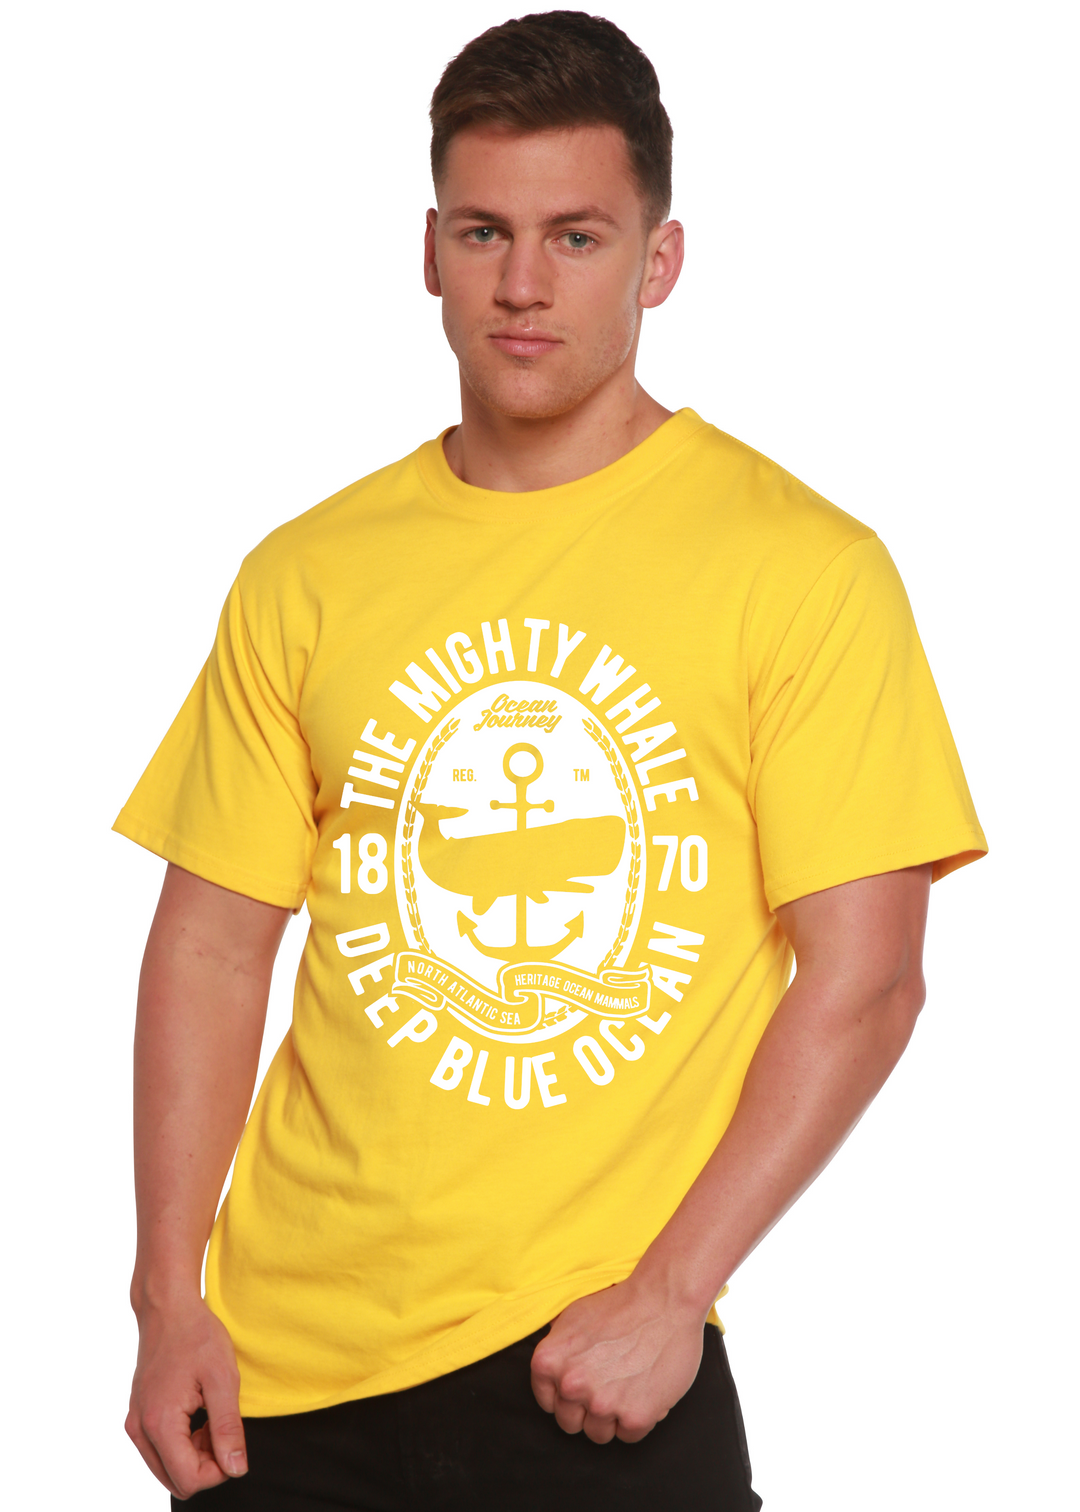 The Mighty Whale men's bamboo tshirt lemon chrome